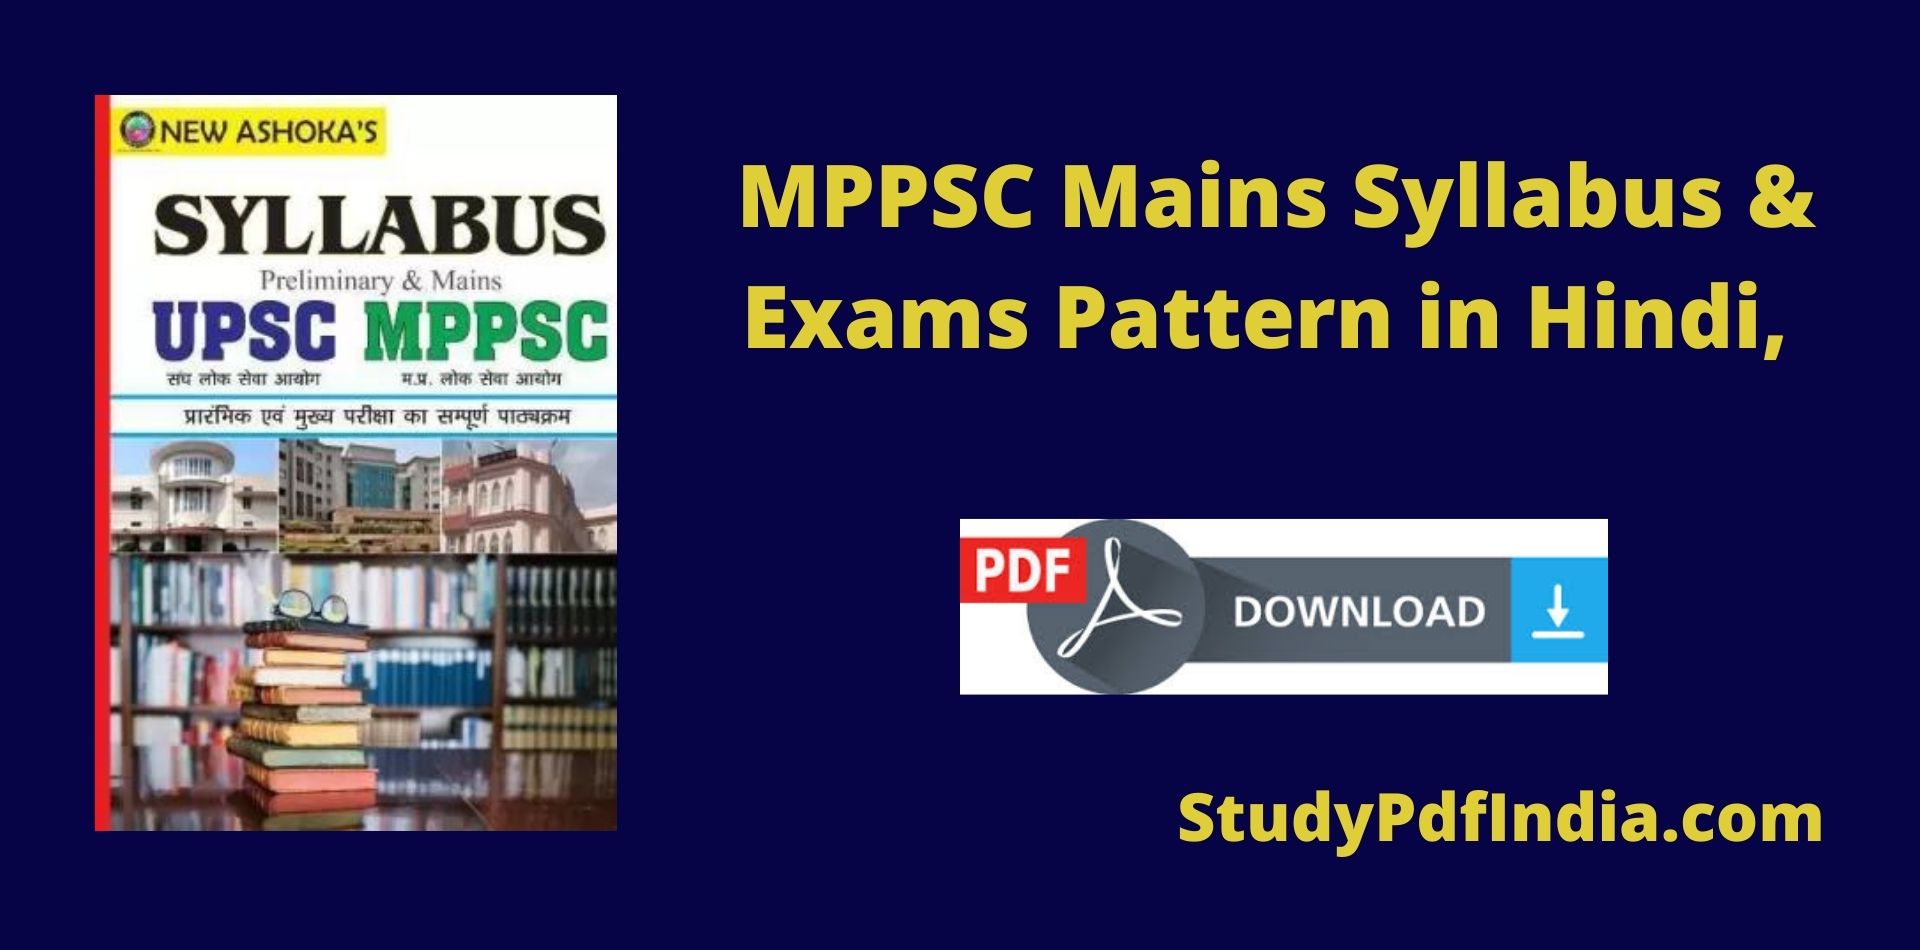 MPPSC Mains Syllabus & Exams Pattern PDF Download in Hindi,